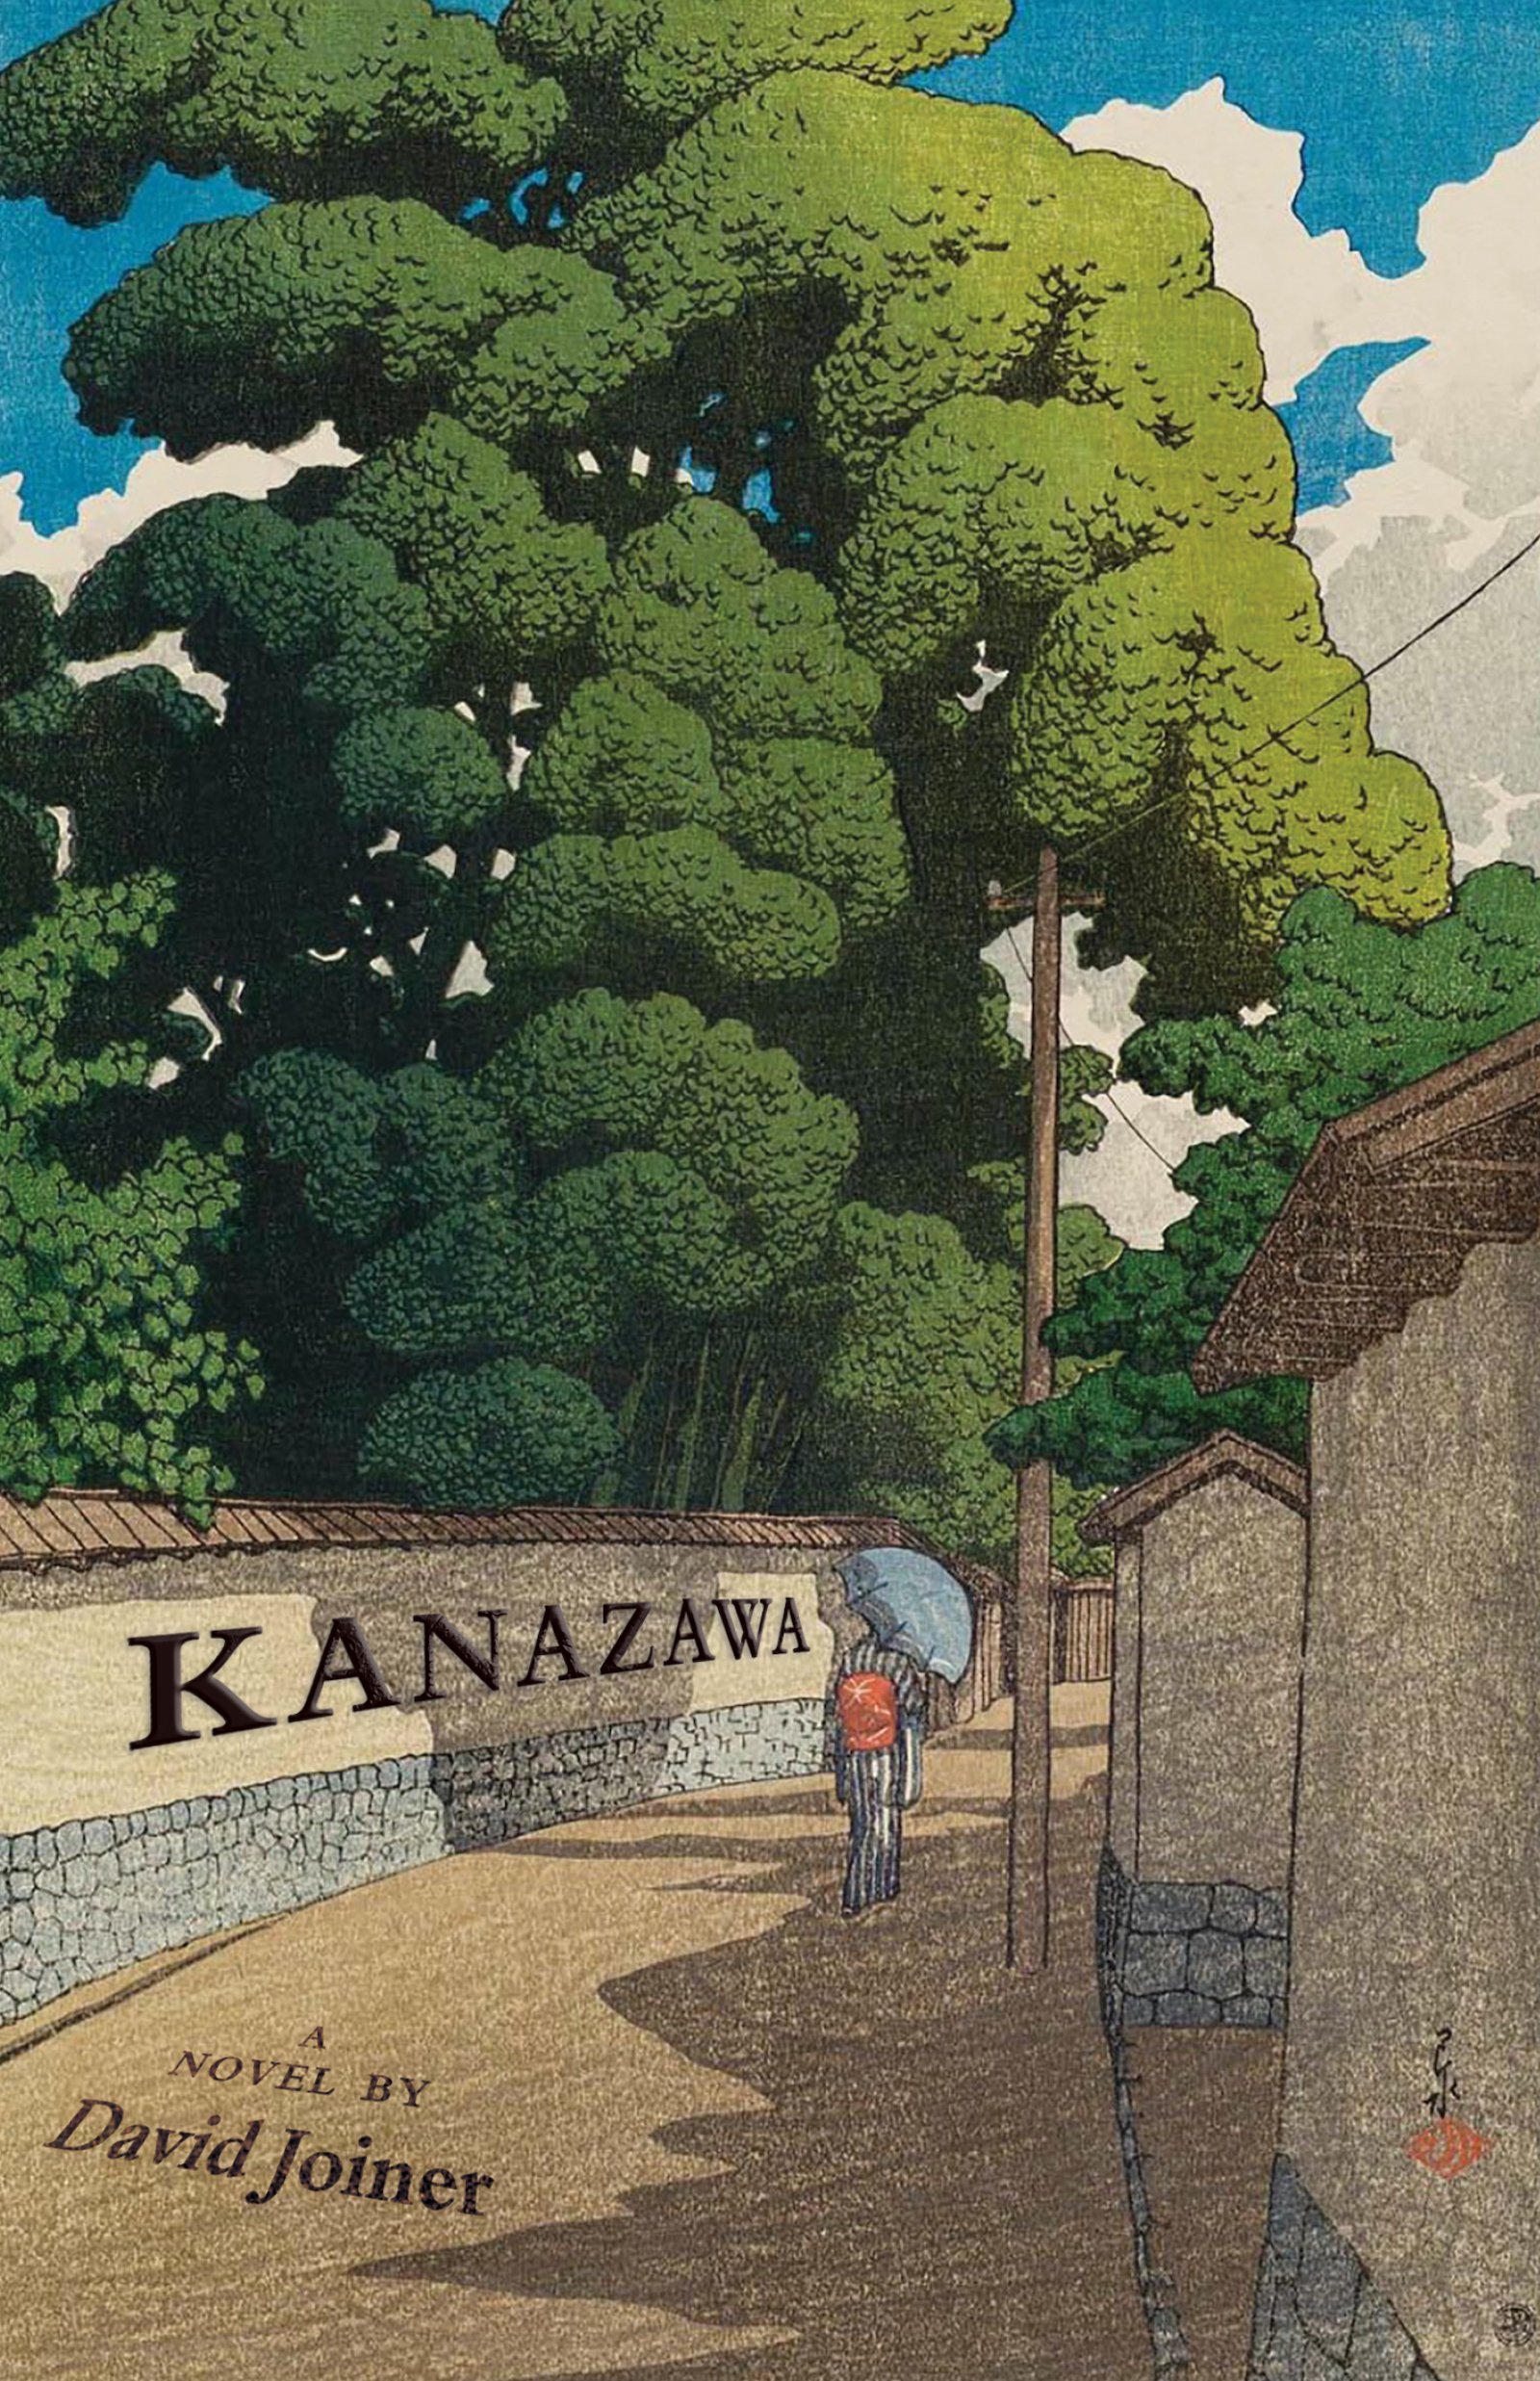 Kanazawa by David Joiner cover artwork.jpg